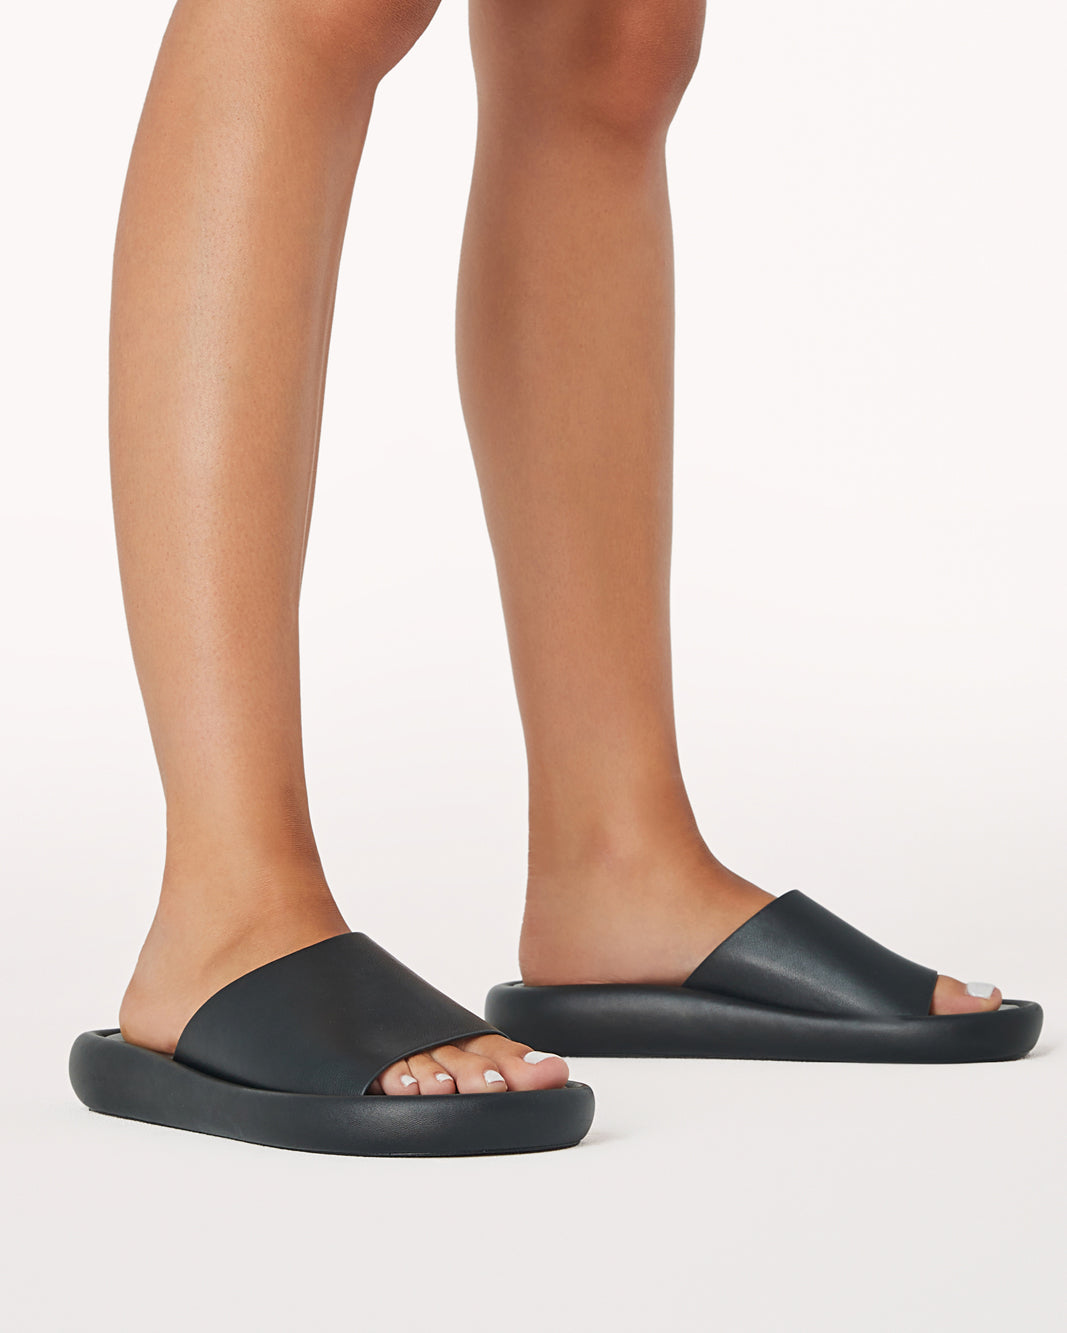 NELLIE - BLACK-Sandals-Billini-Billini